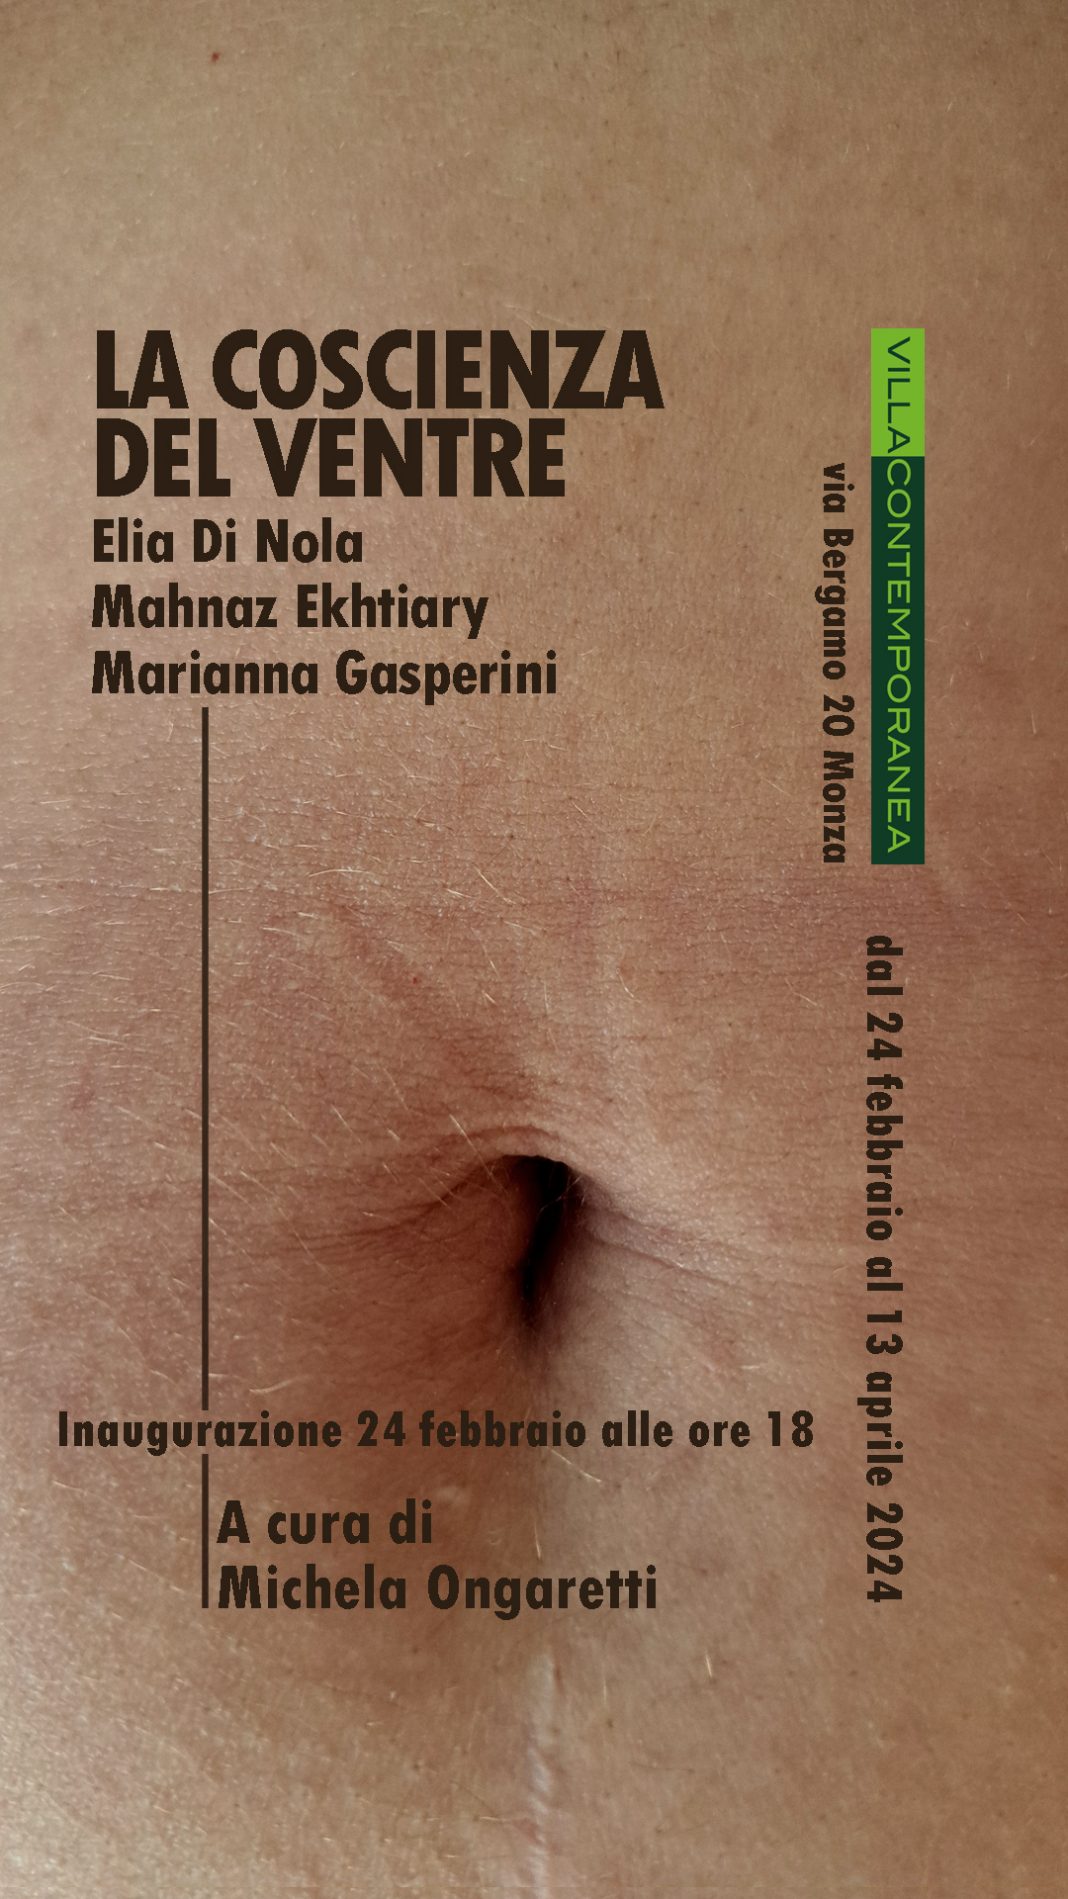 Elia Di Nola / Mahnaz Ekhtiary /  Marianna Gasperini – La coscienza del ventrehttps://www.exibart.com/repository/media/formidable/11/img/860/story-1068x1899.jpg